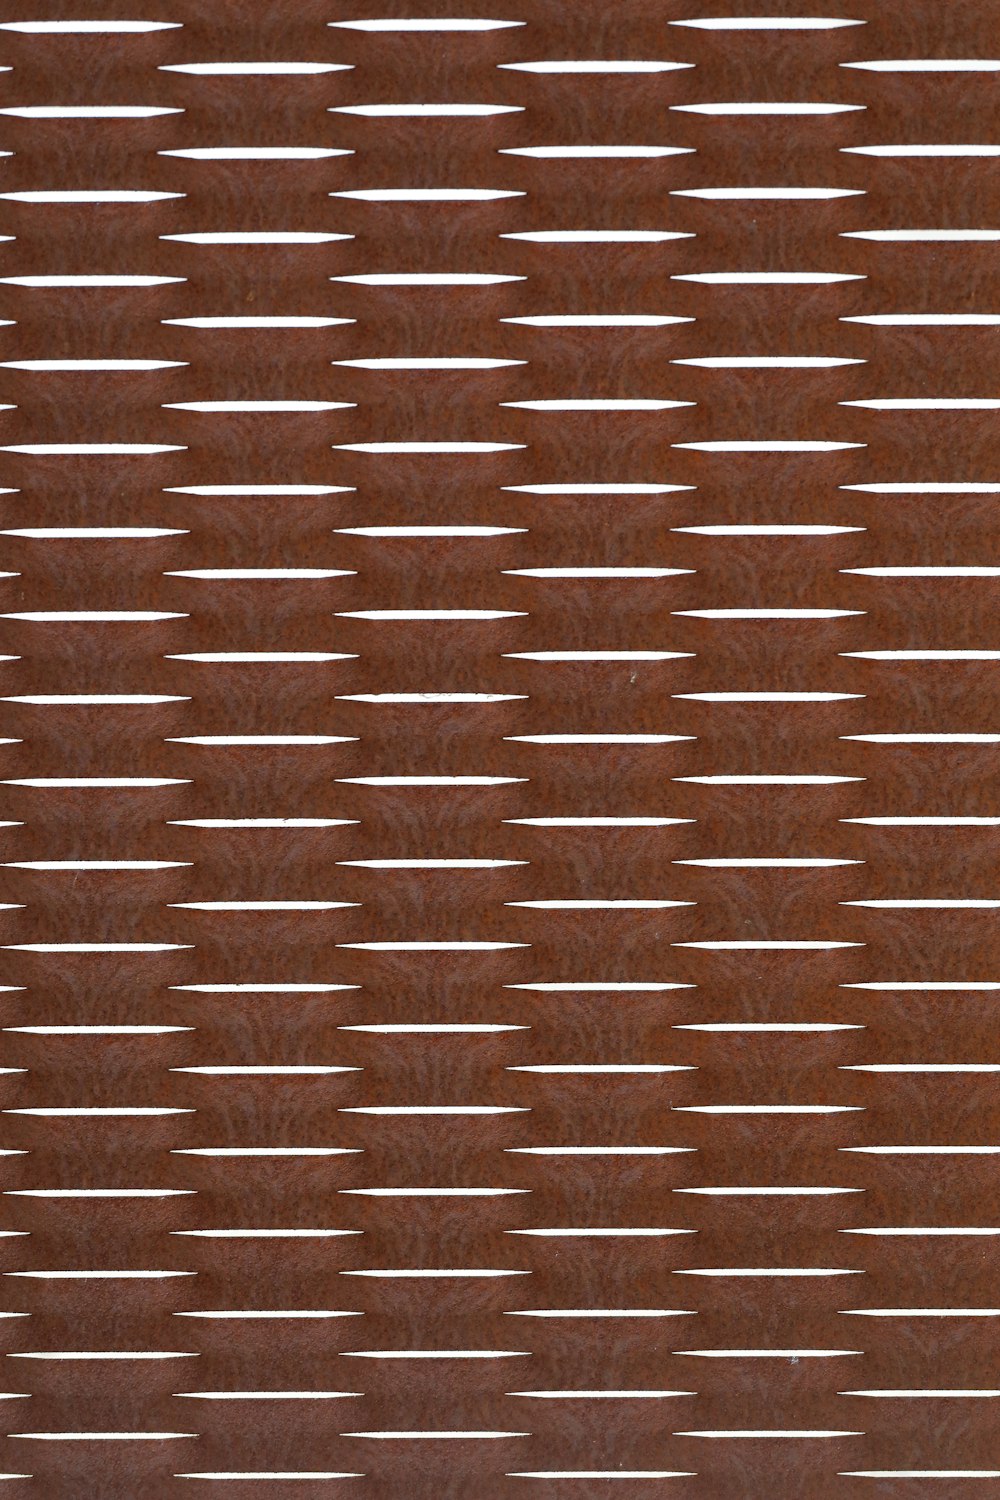 brown brick wall during daytime